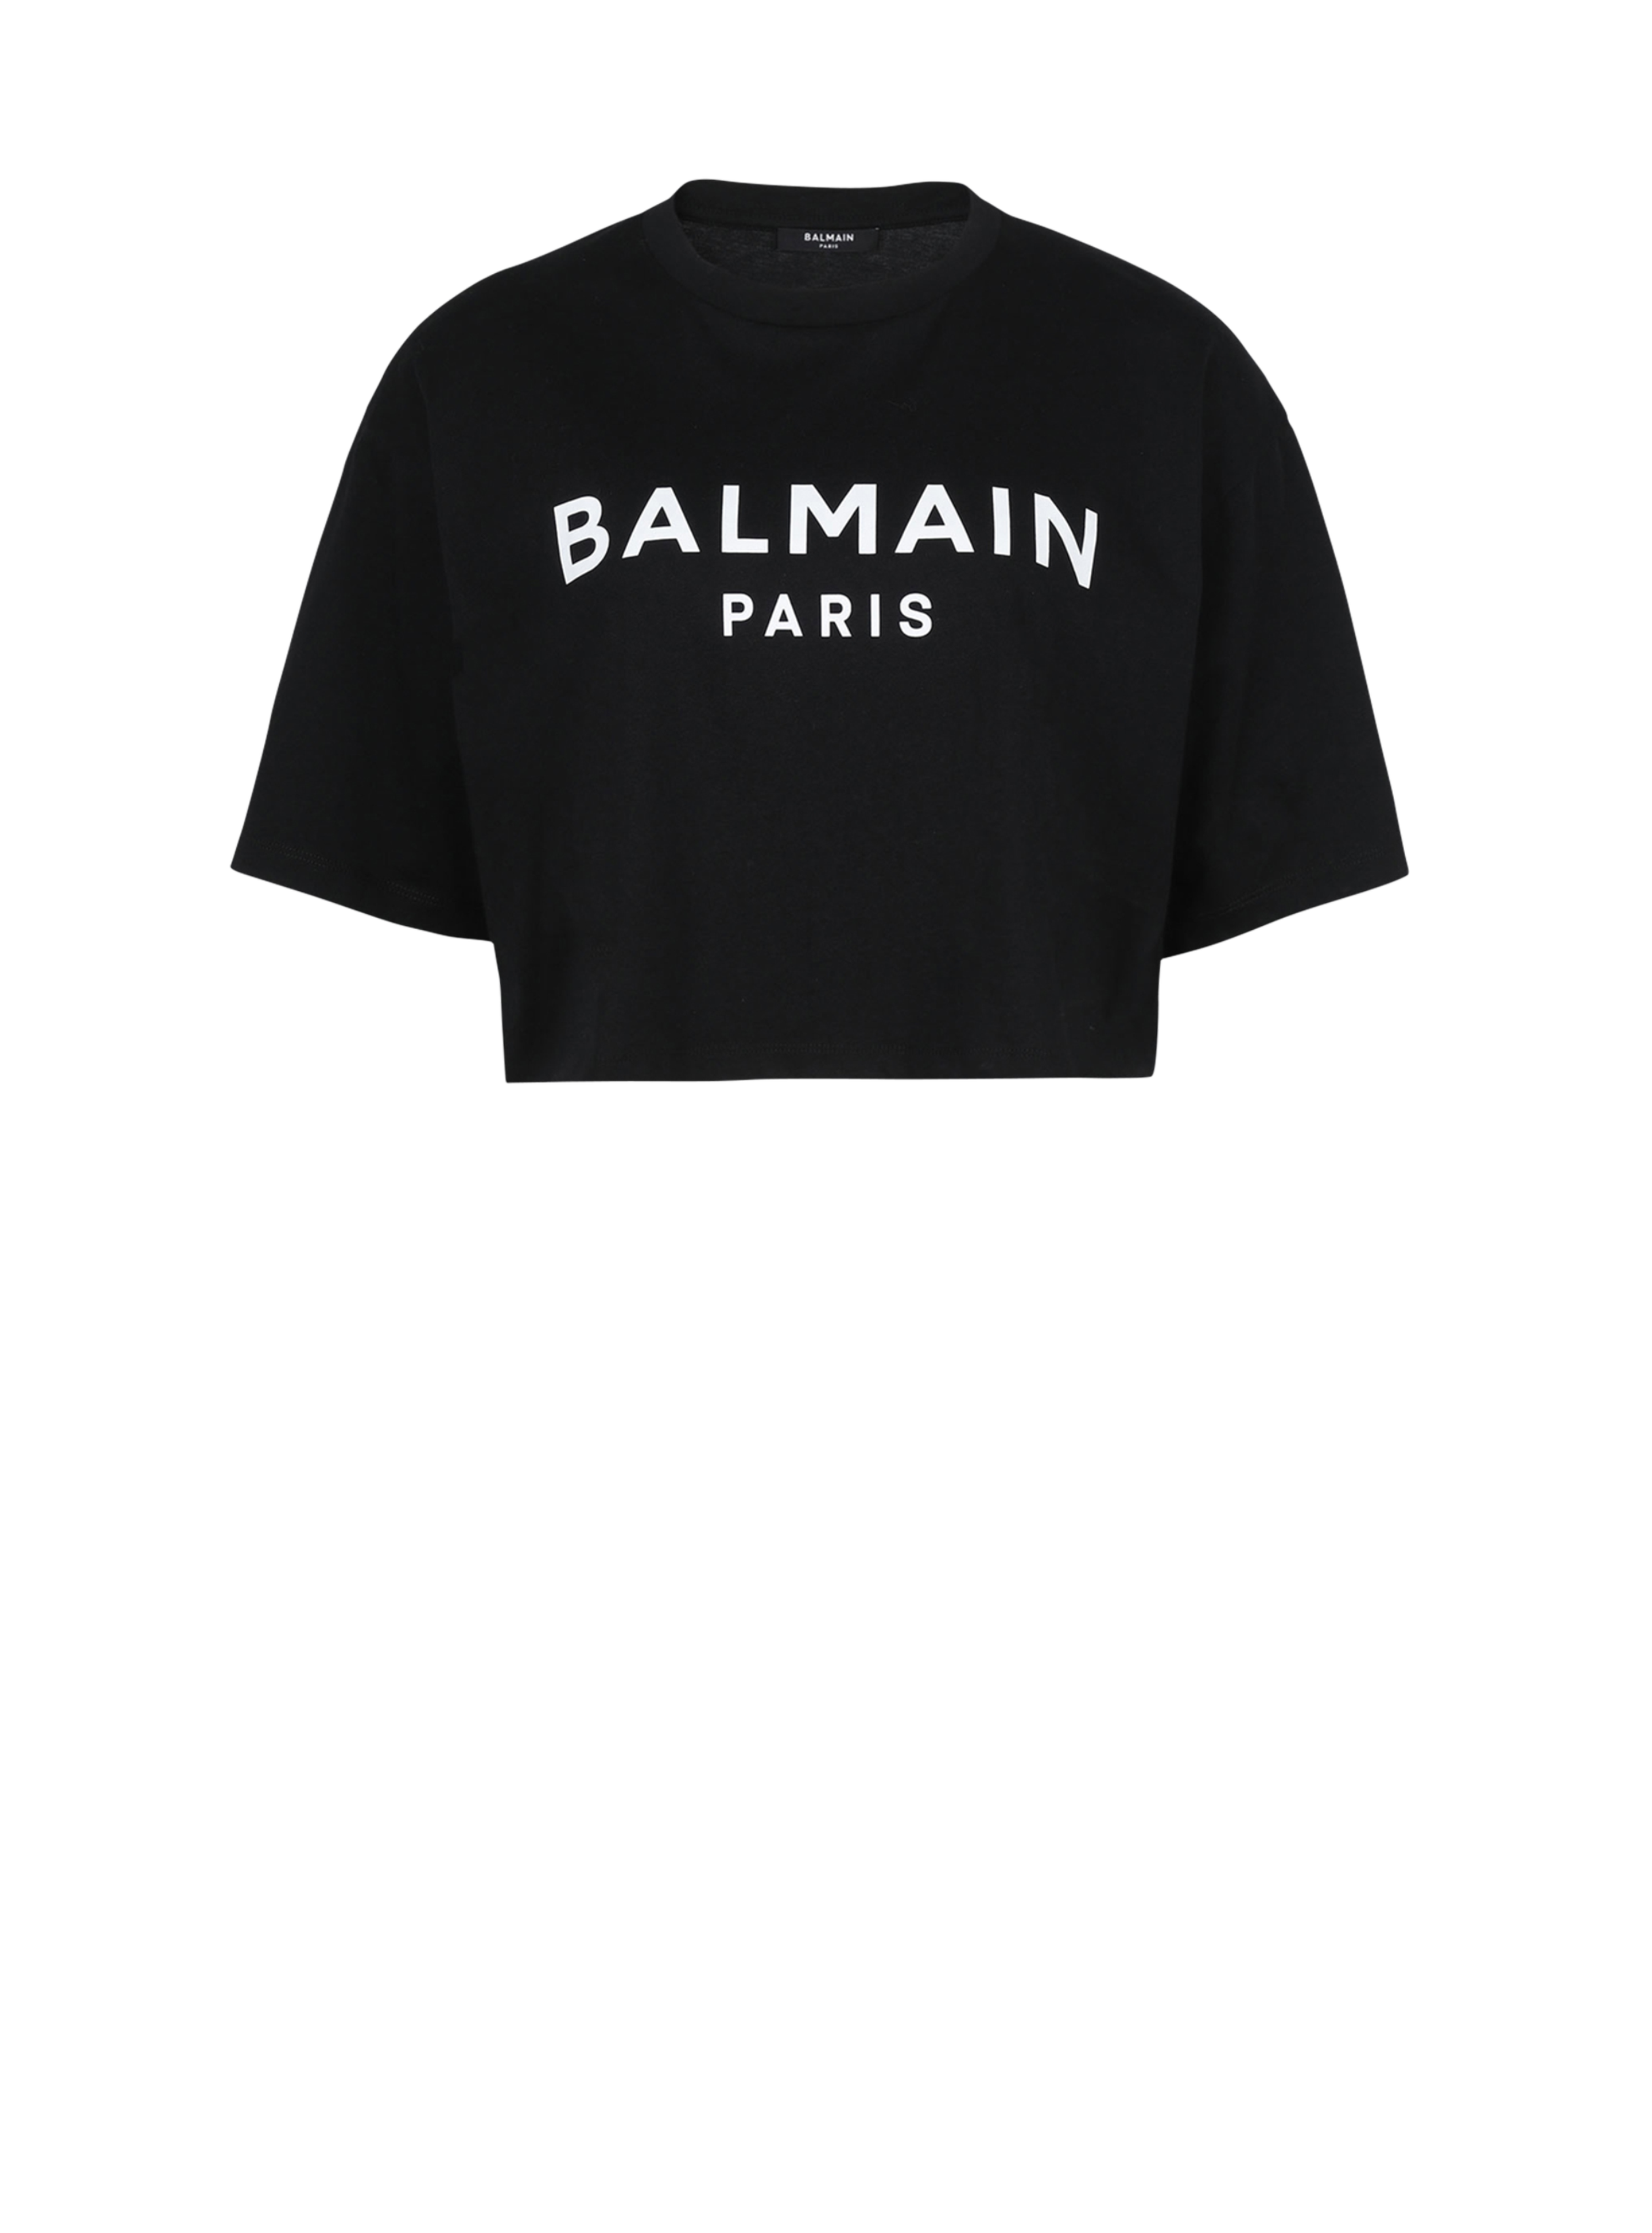 Cropped eco-designed cotton T-shirt with Balmain logo print, black